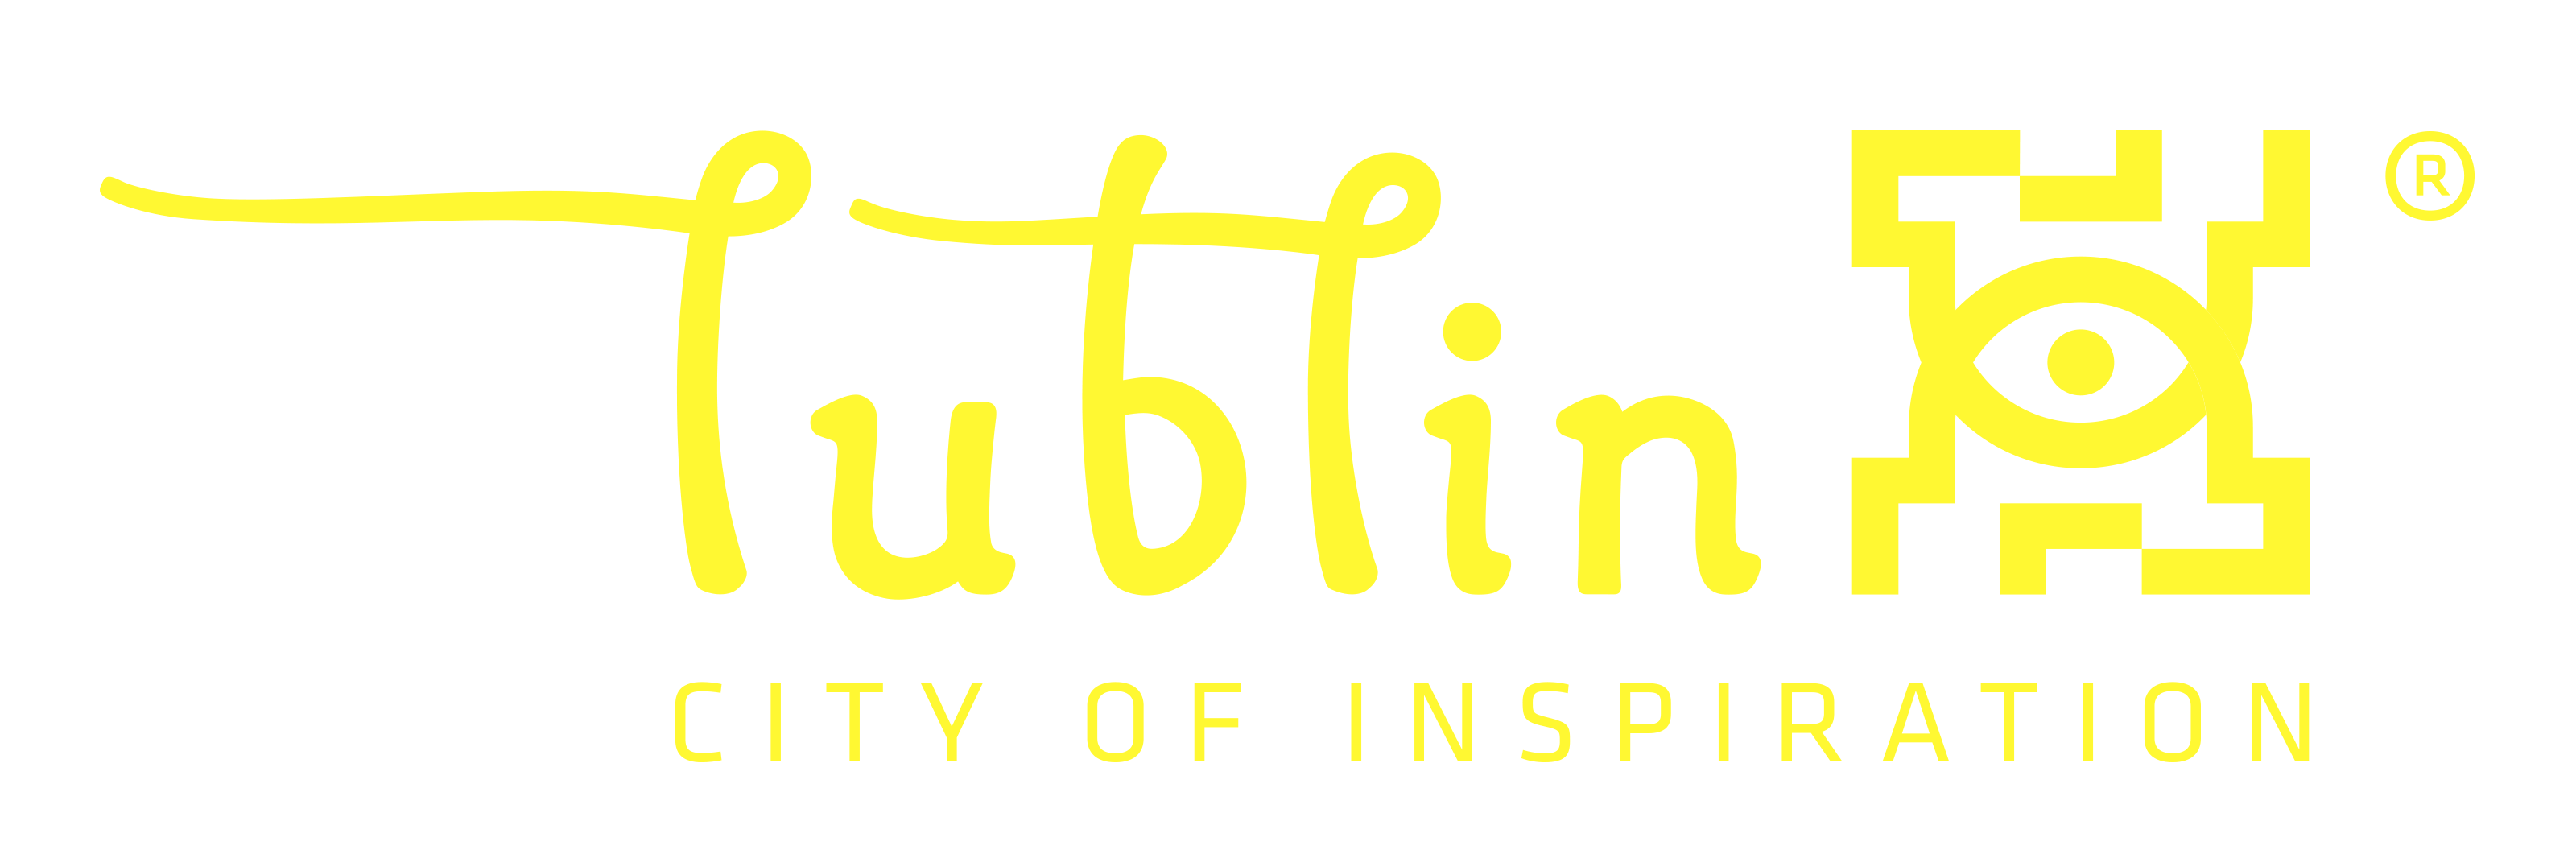 Kontrastowe logo Miasta Lublin